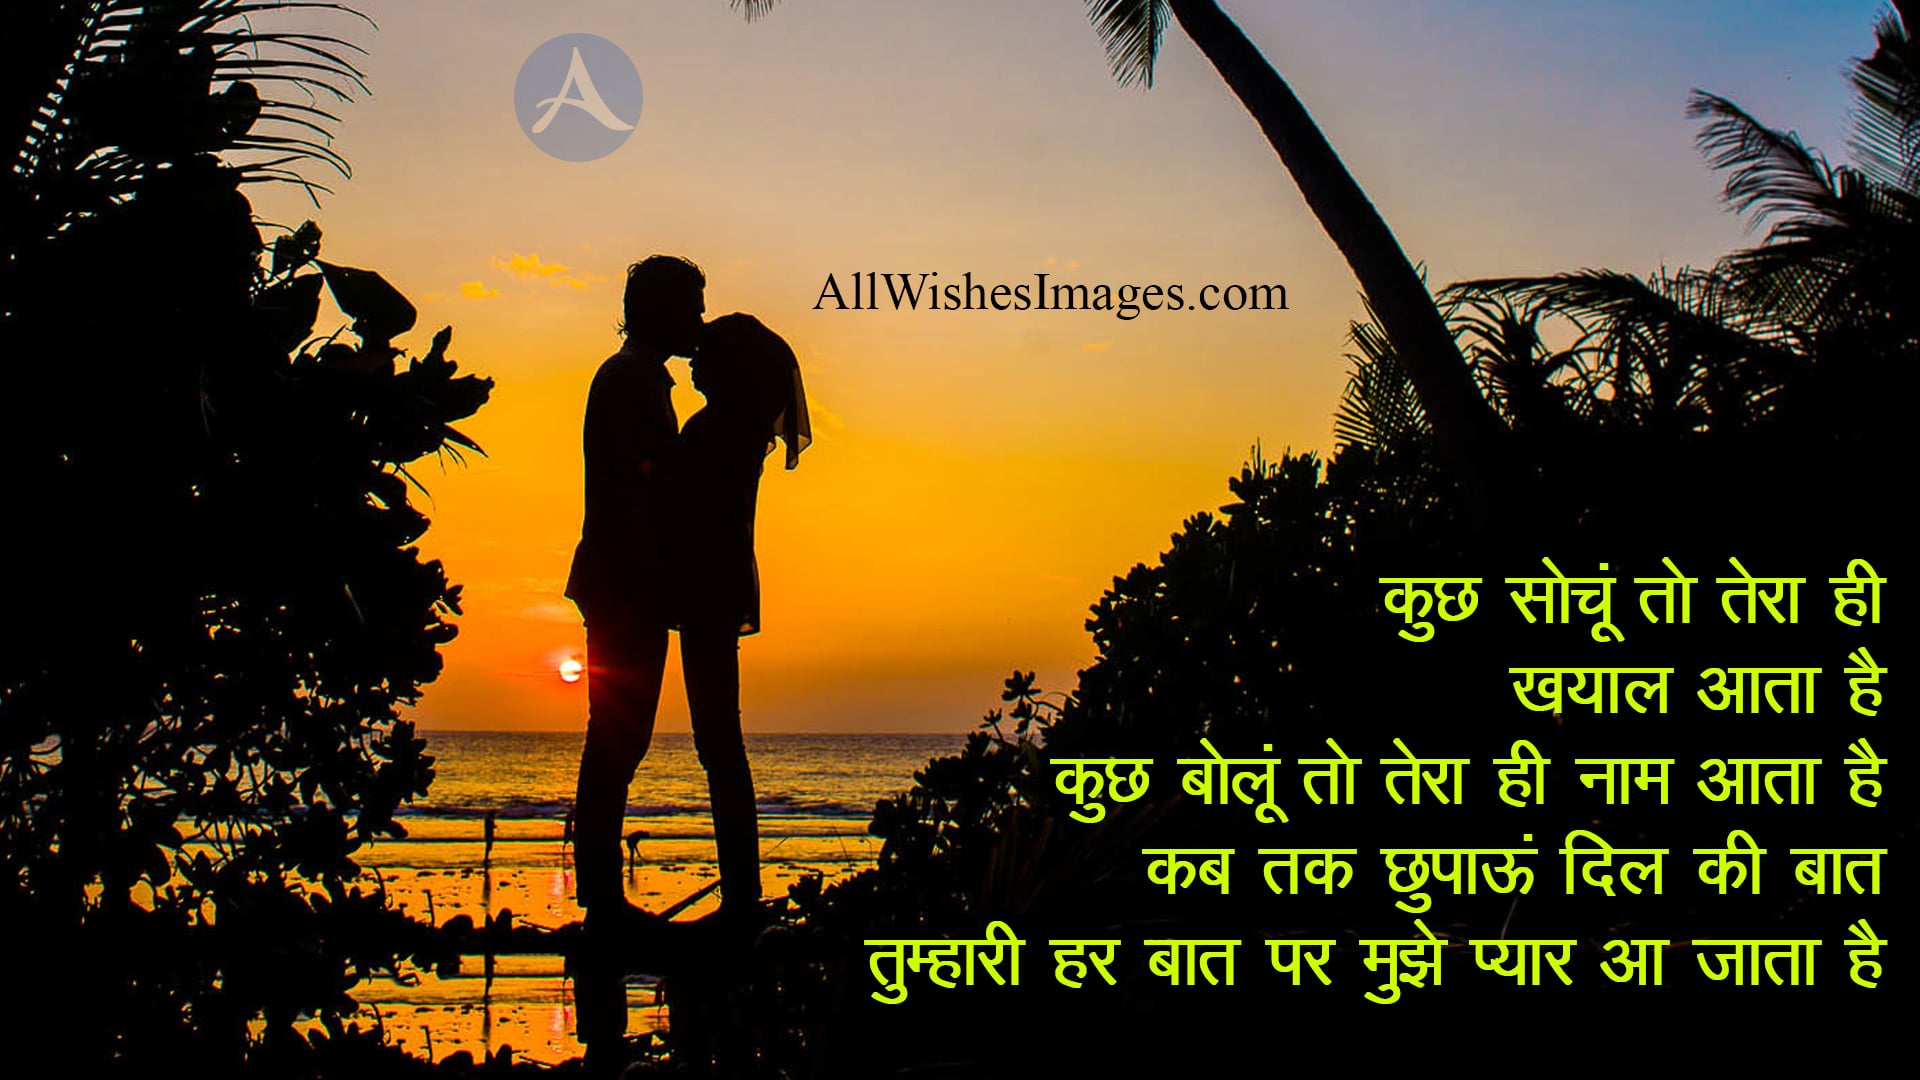 Romantic Shayari With Images For Facebook - Love Shayari Images